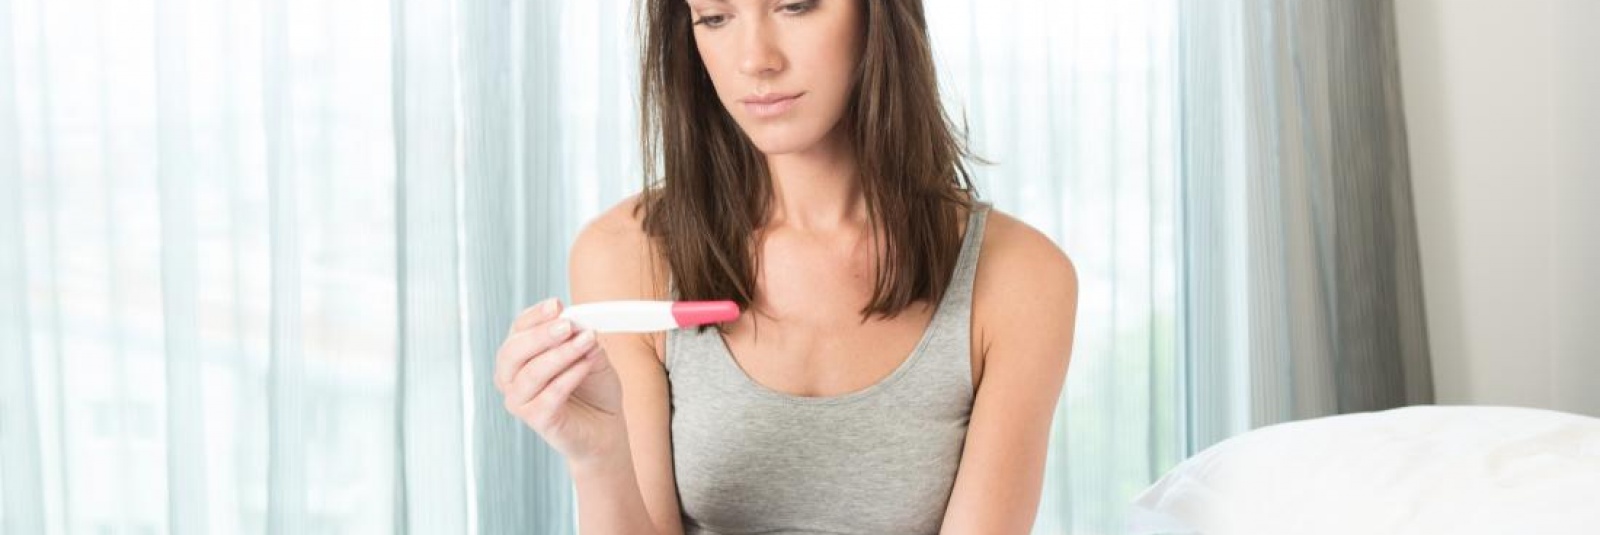 Poti face prea devreme un test de sarcina?